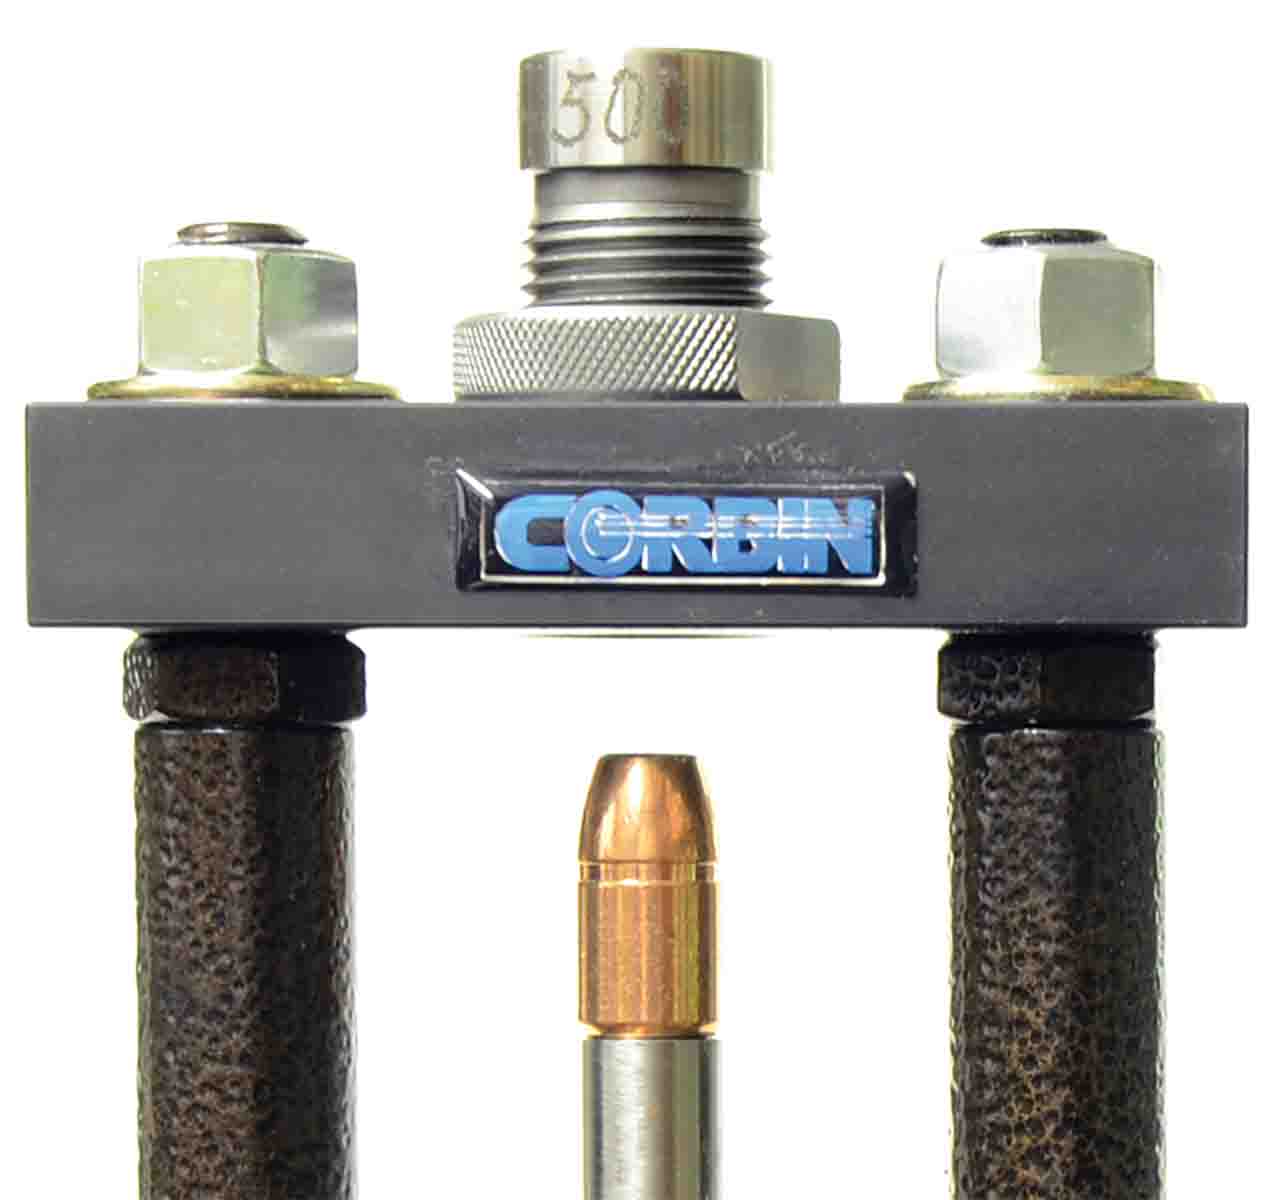 Using a Corbin CSP-1 press to push the Swift .510-inch, 450-grain A-Frame through an annular draw die decreases its diameter to .500 inch for the .50 B&M Alaskan.